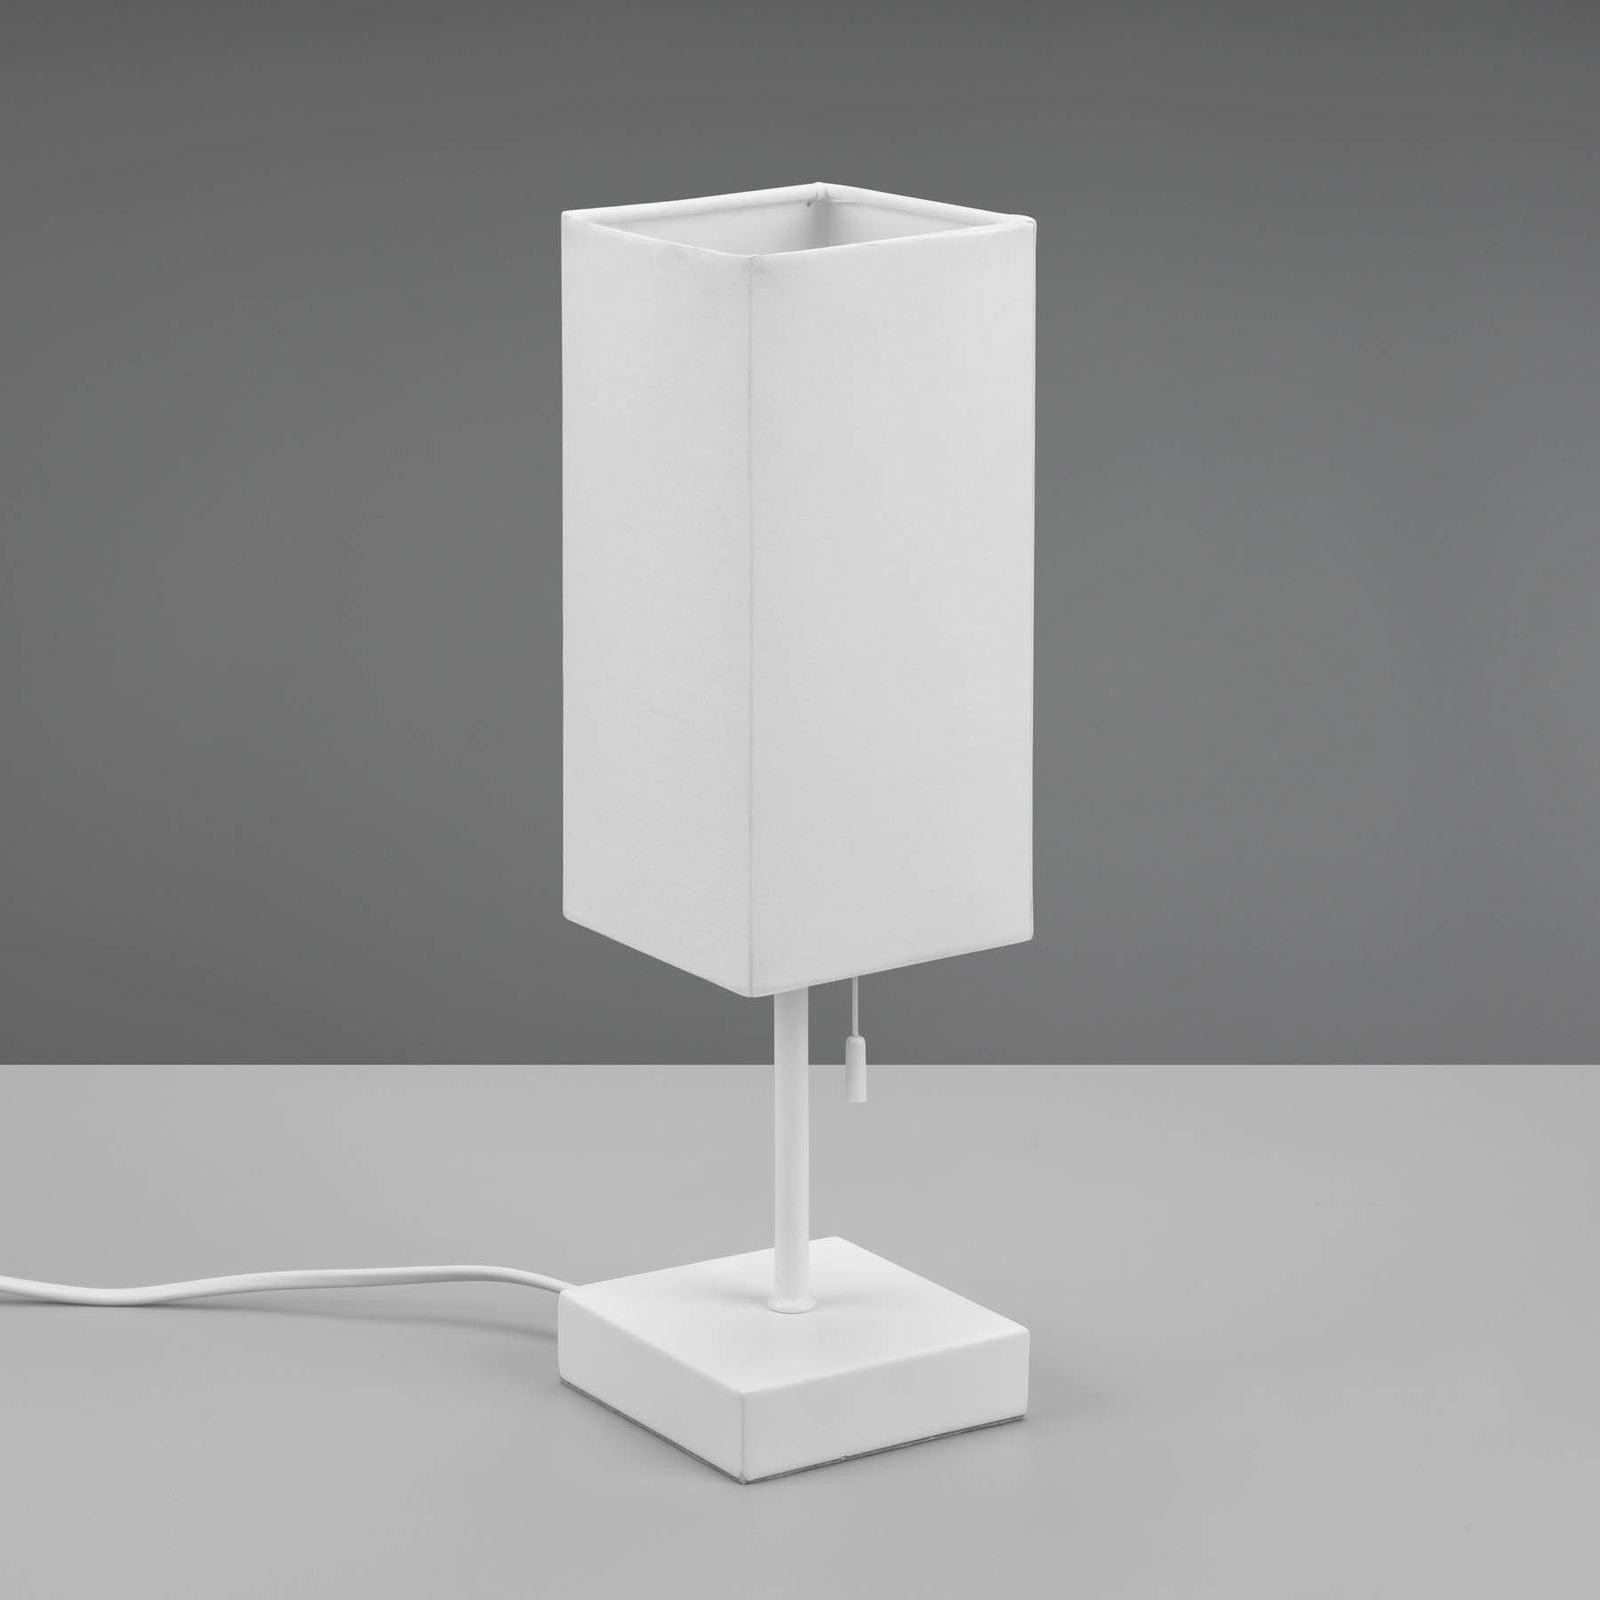 Lampe à poser Ole avec port USB, blanc/blanc